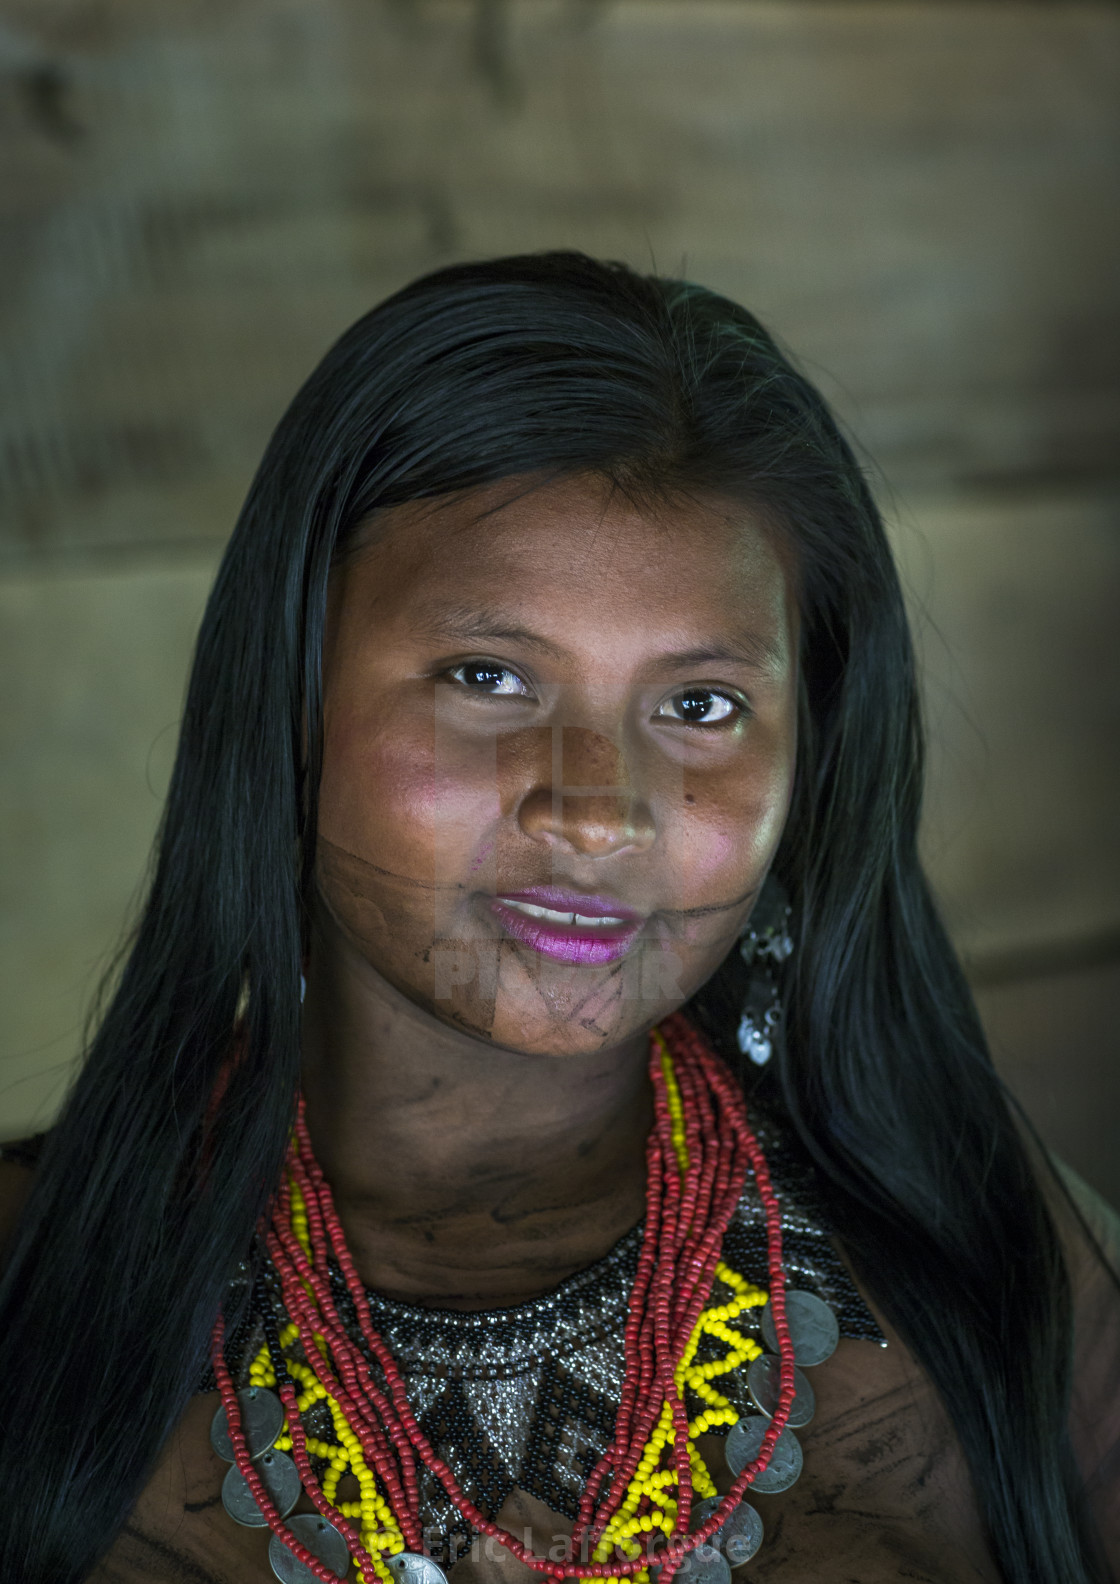 "Panama, Darien Province, Bajo Chiquito, Woman Of The Native Indian Em...